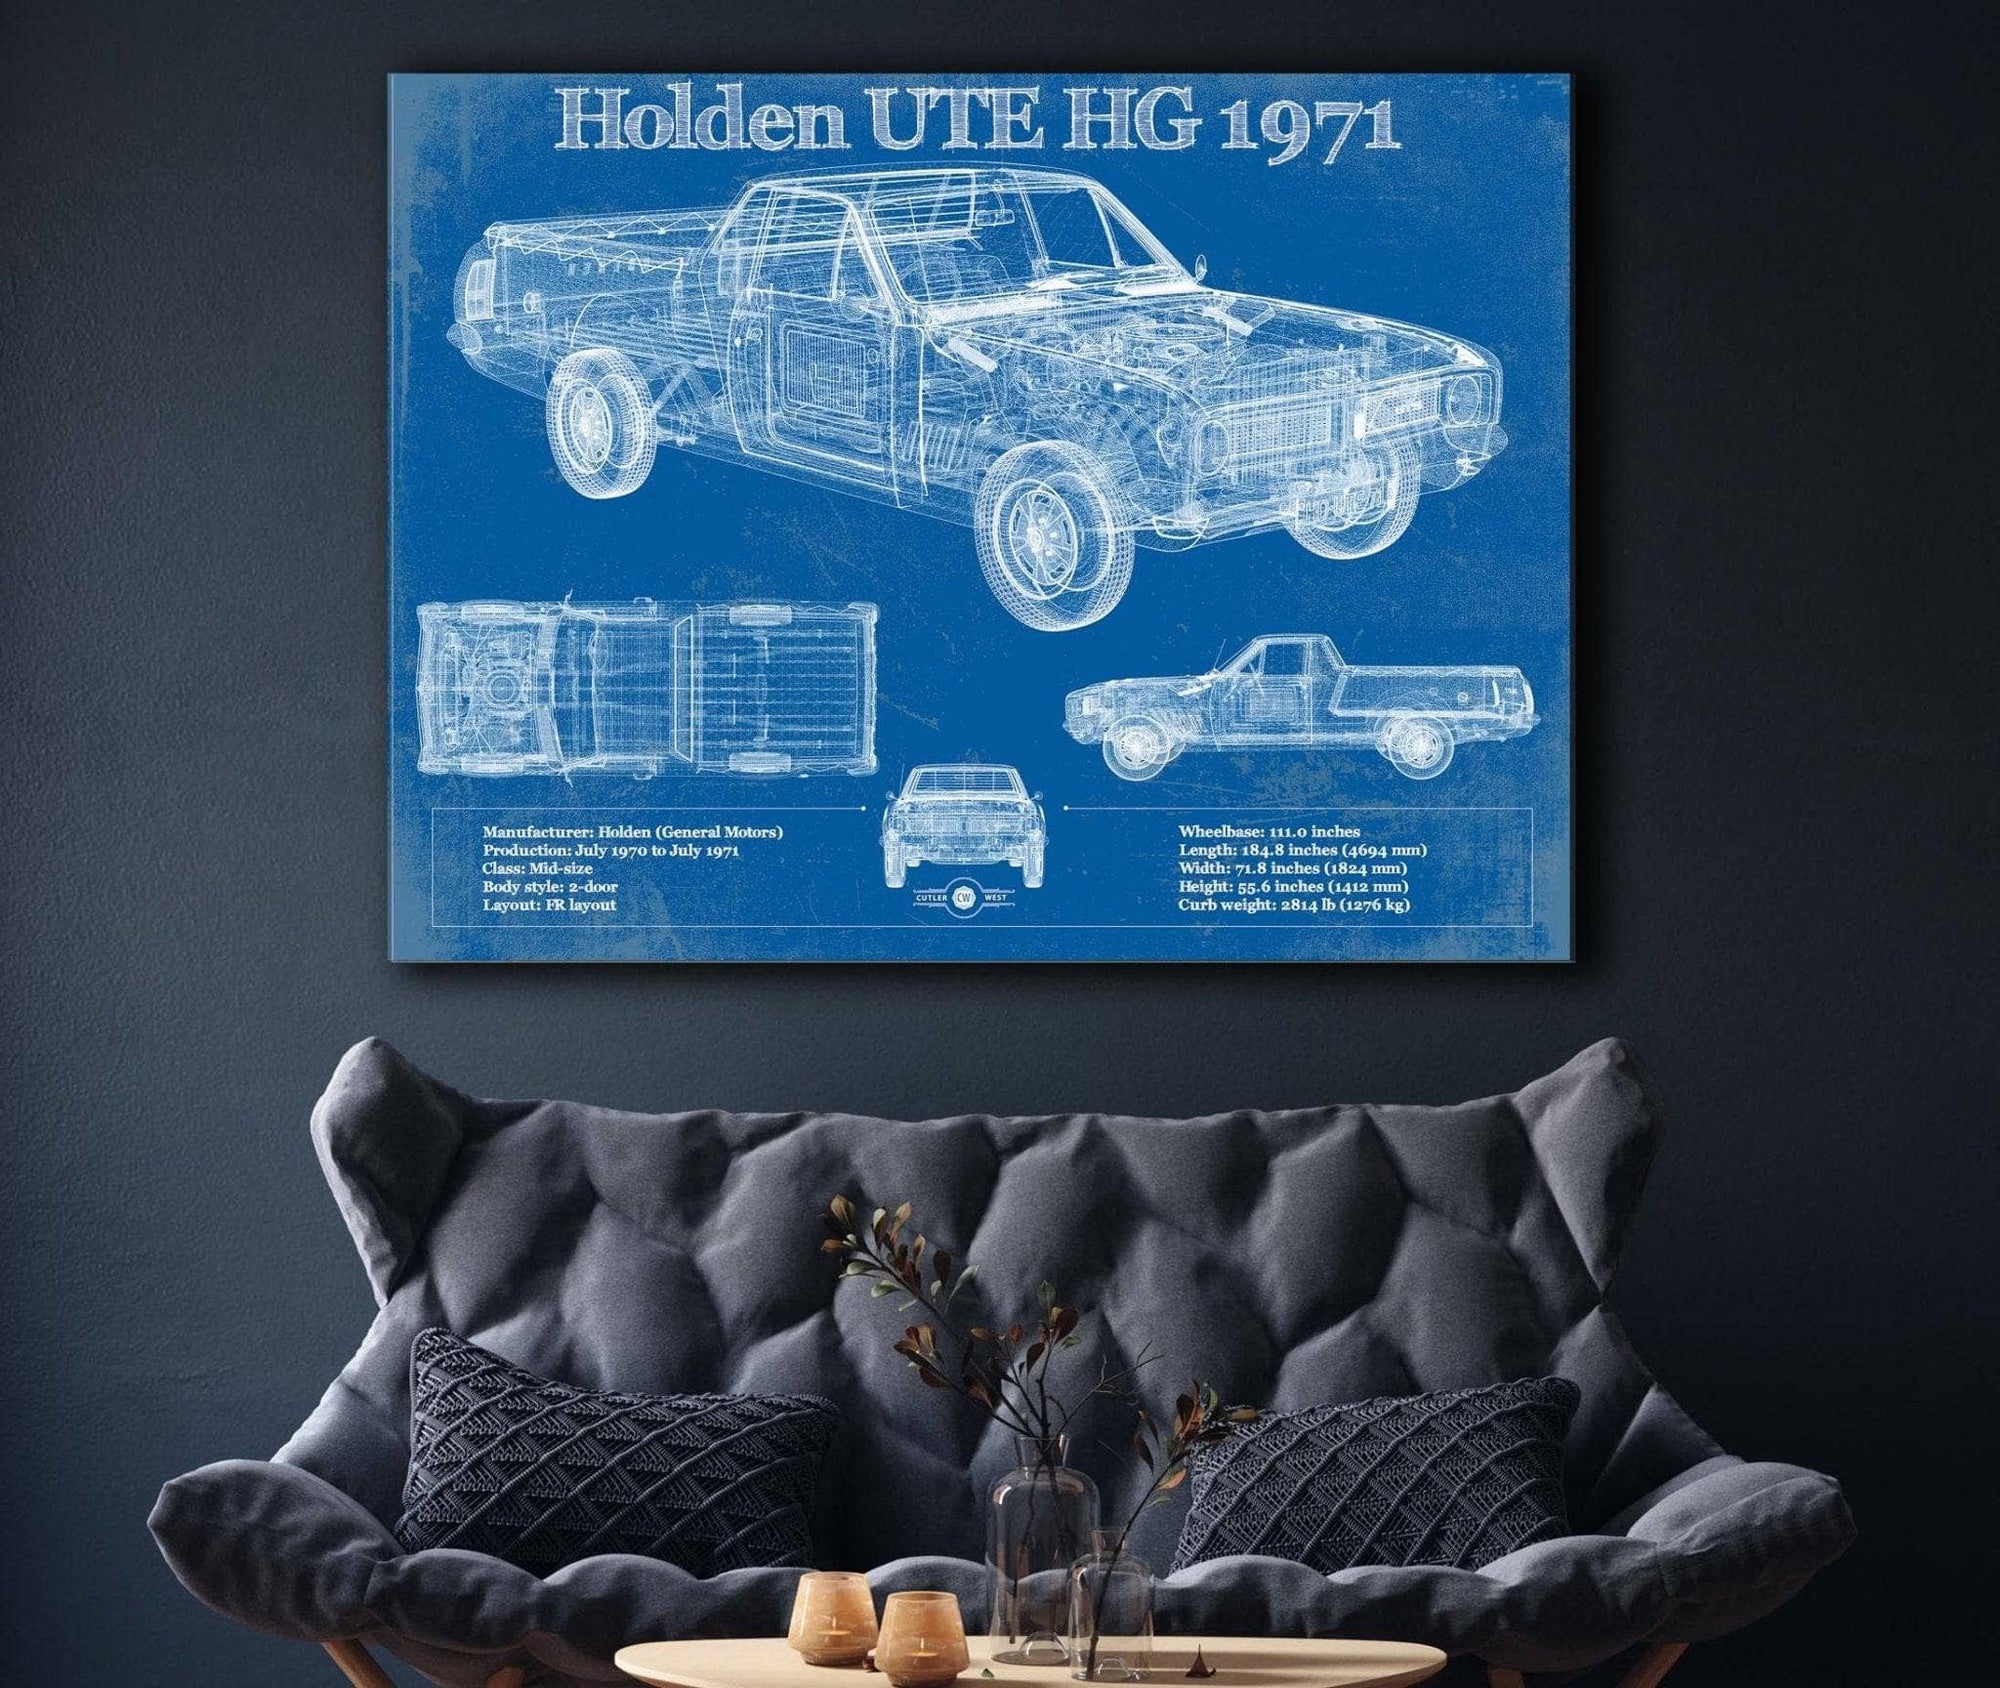 Cutler West Vehicle Collection 1971 Holden HG Belmont ute Vintage Auto Print